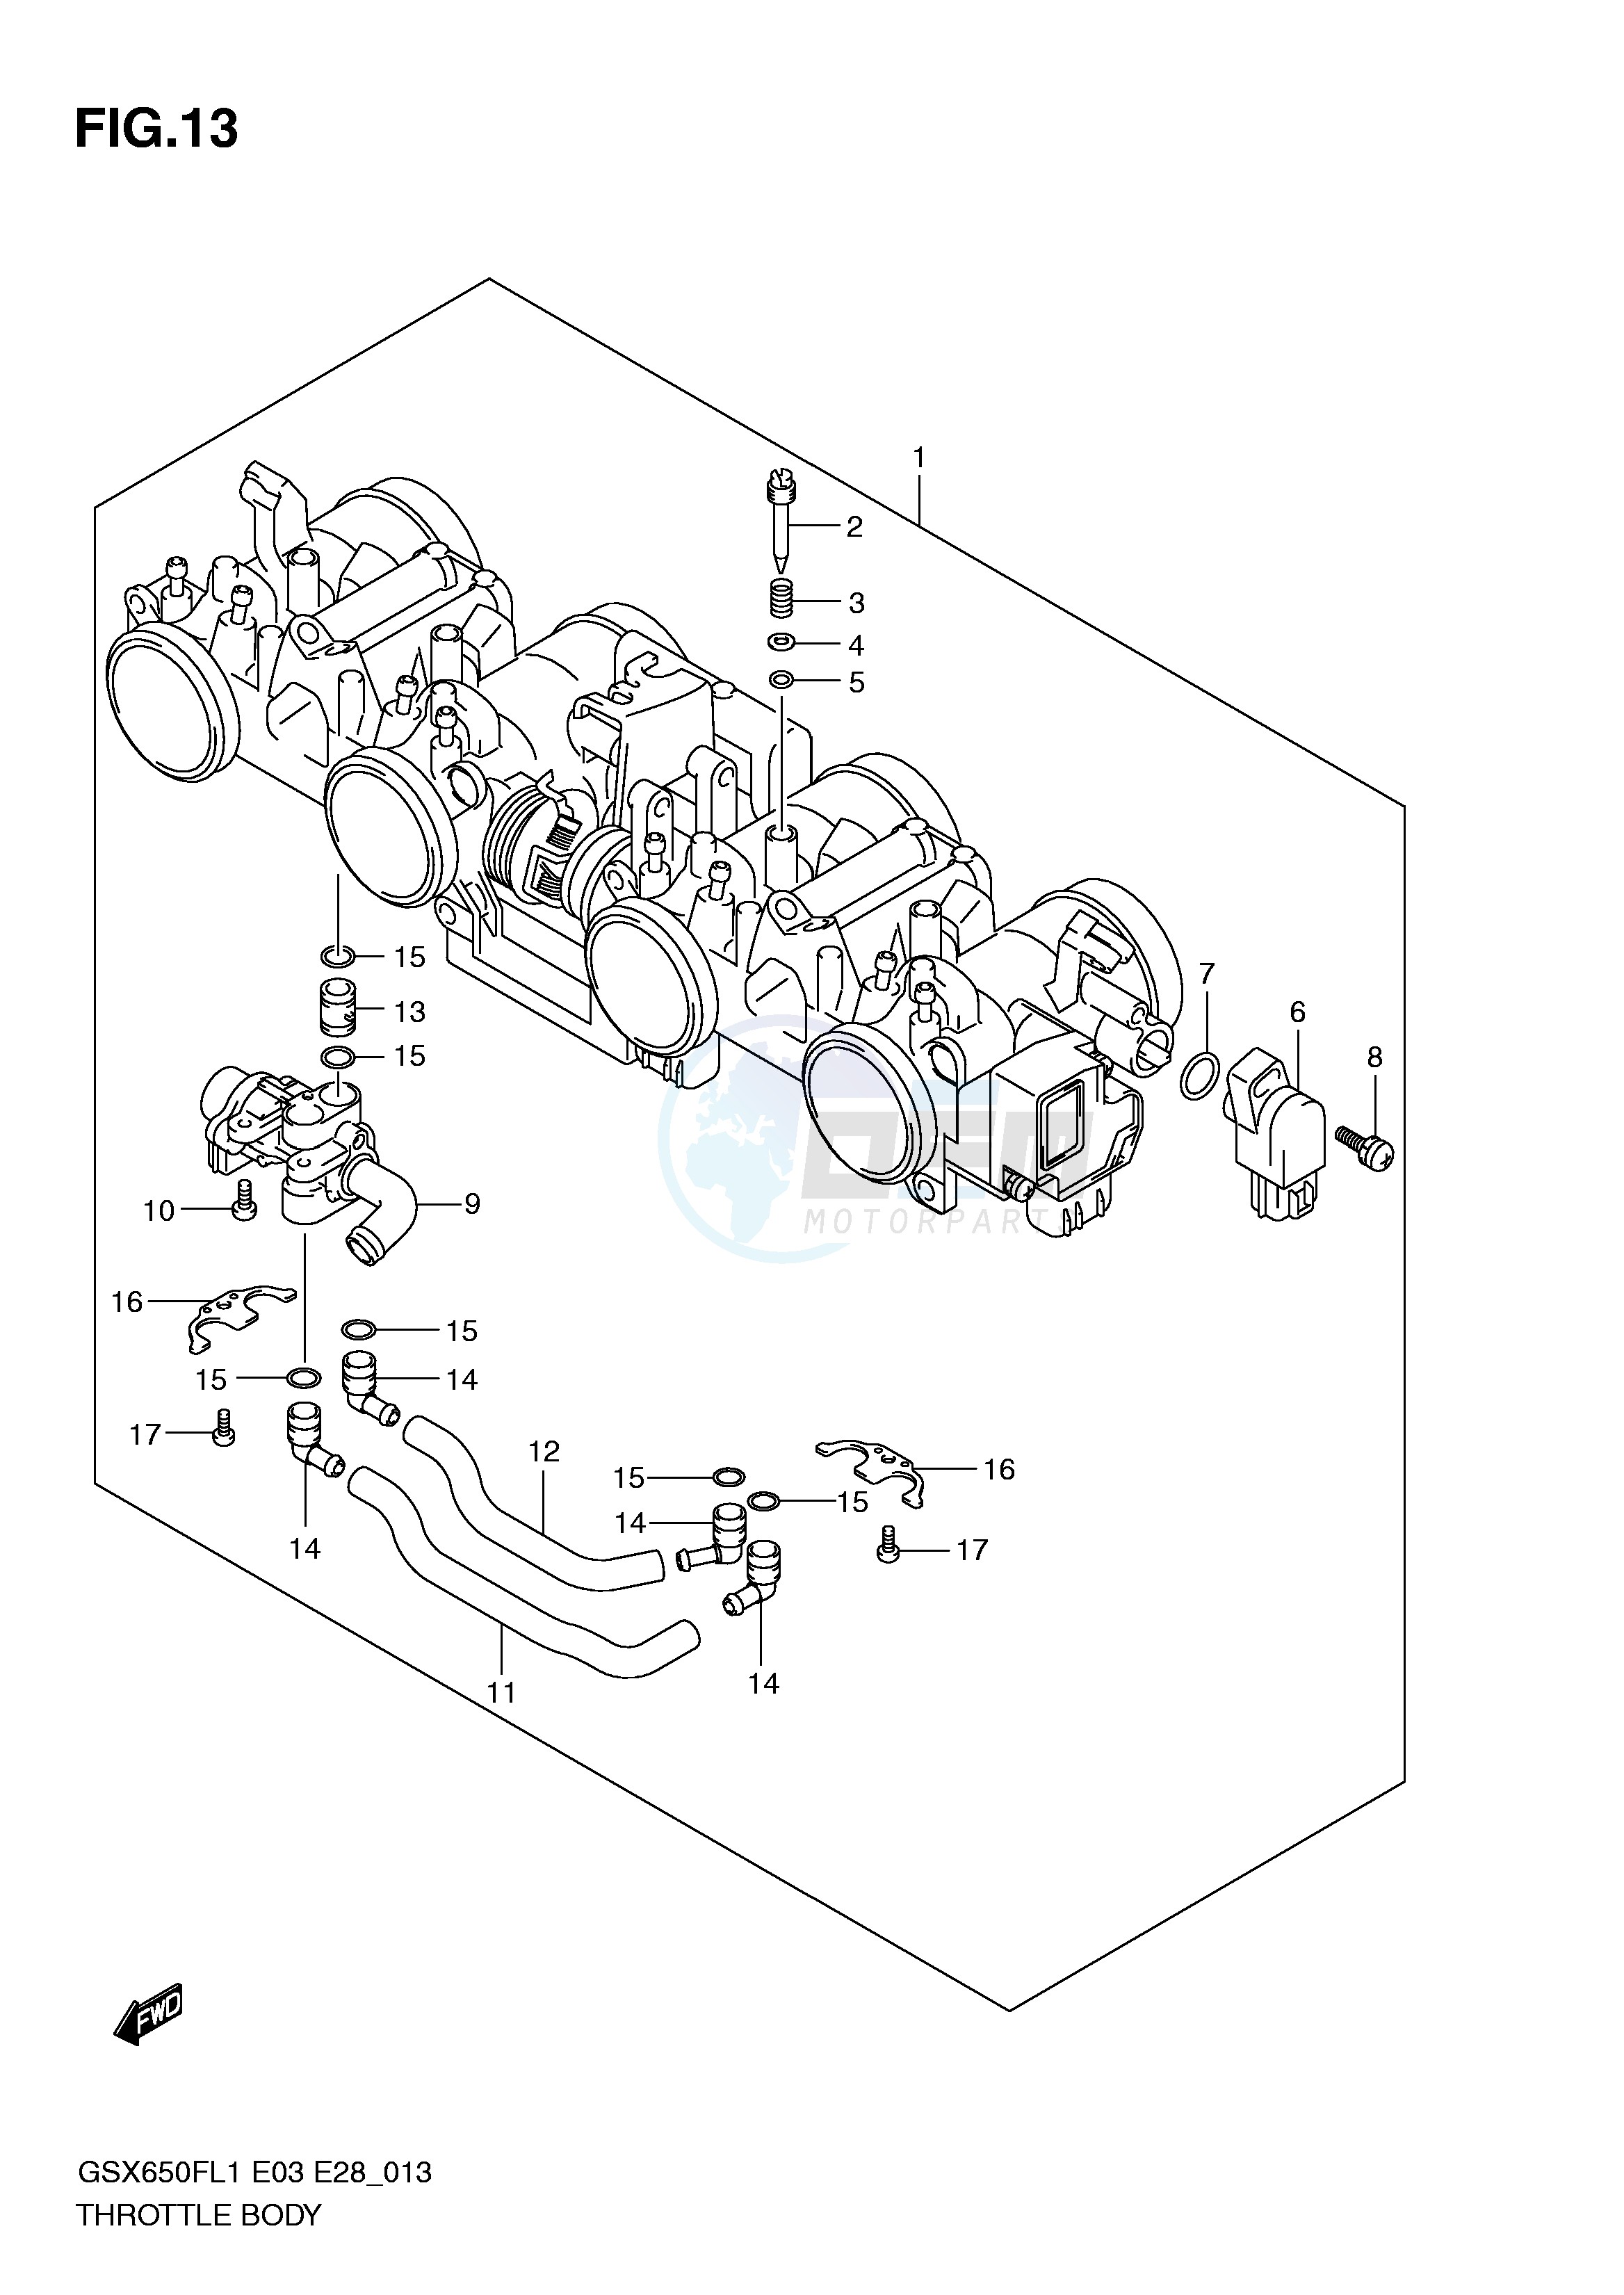 THROTTLE BODY (GSX650FL1 E28) blueprint